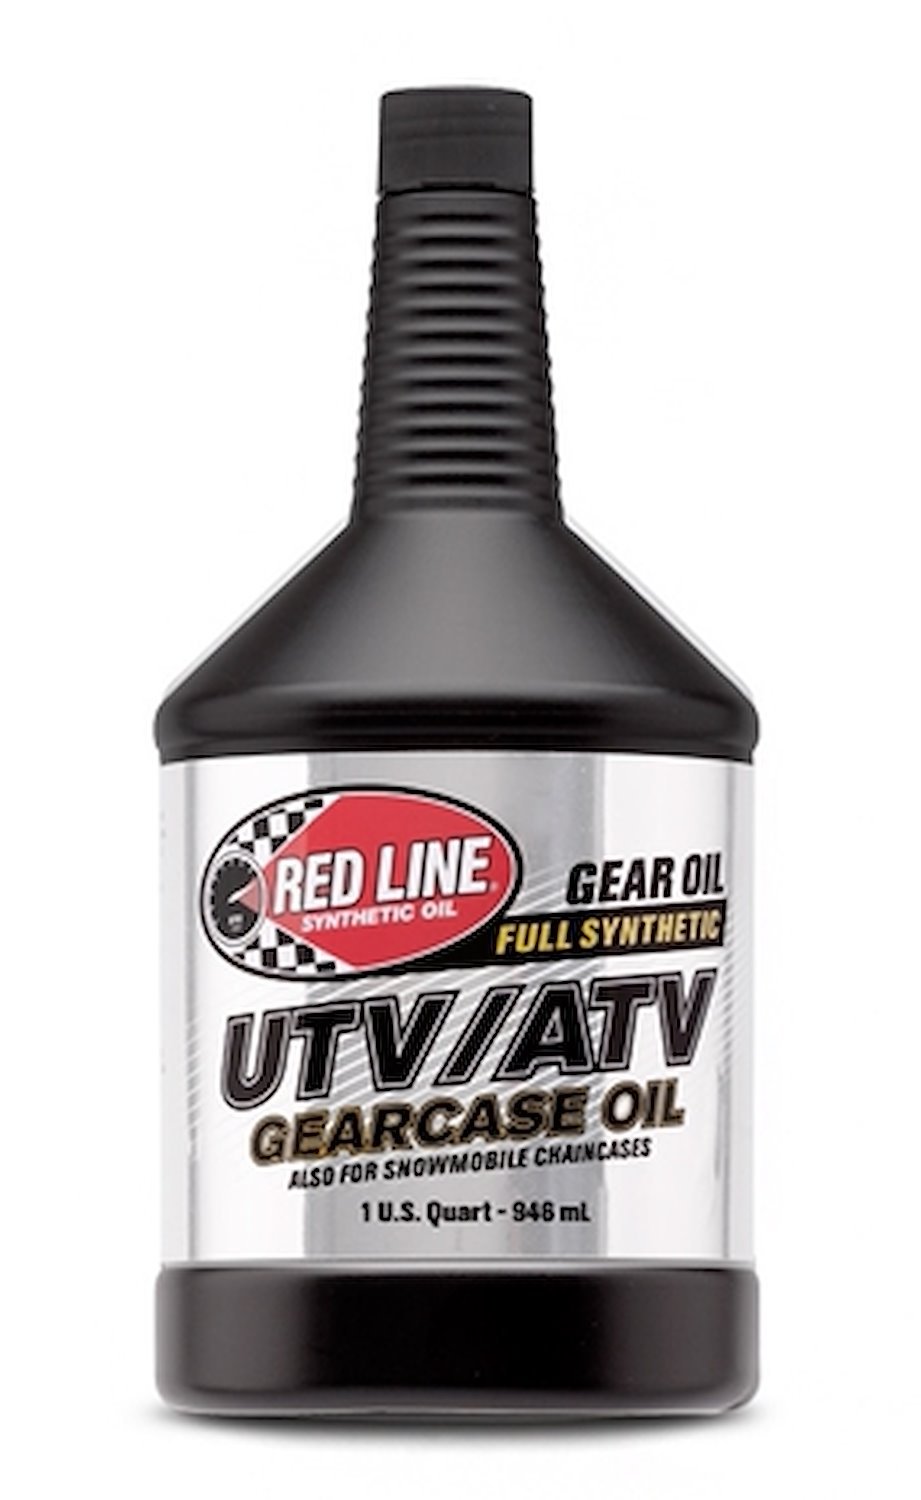 UTV/ATV Gearcase Oil 75W80